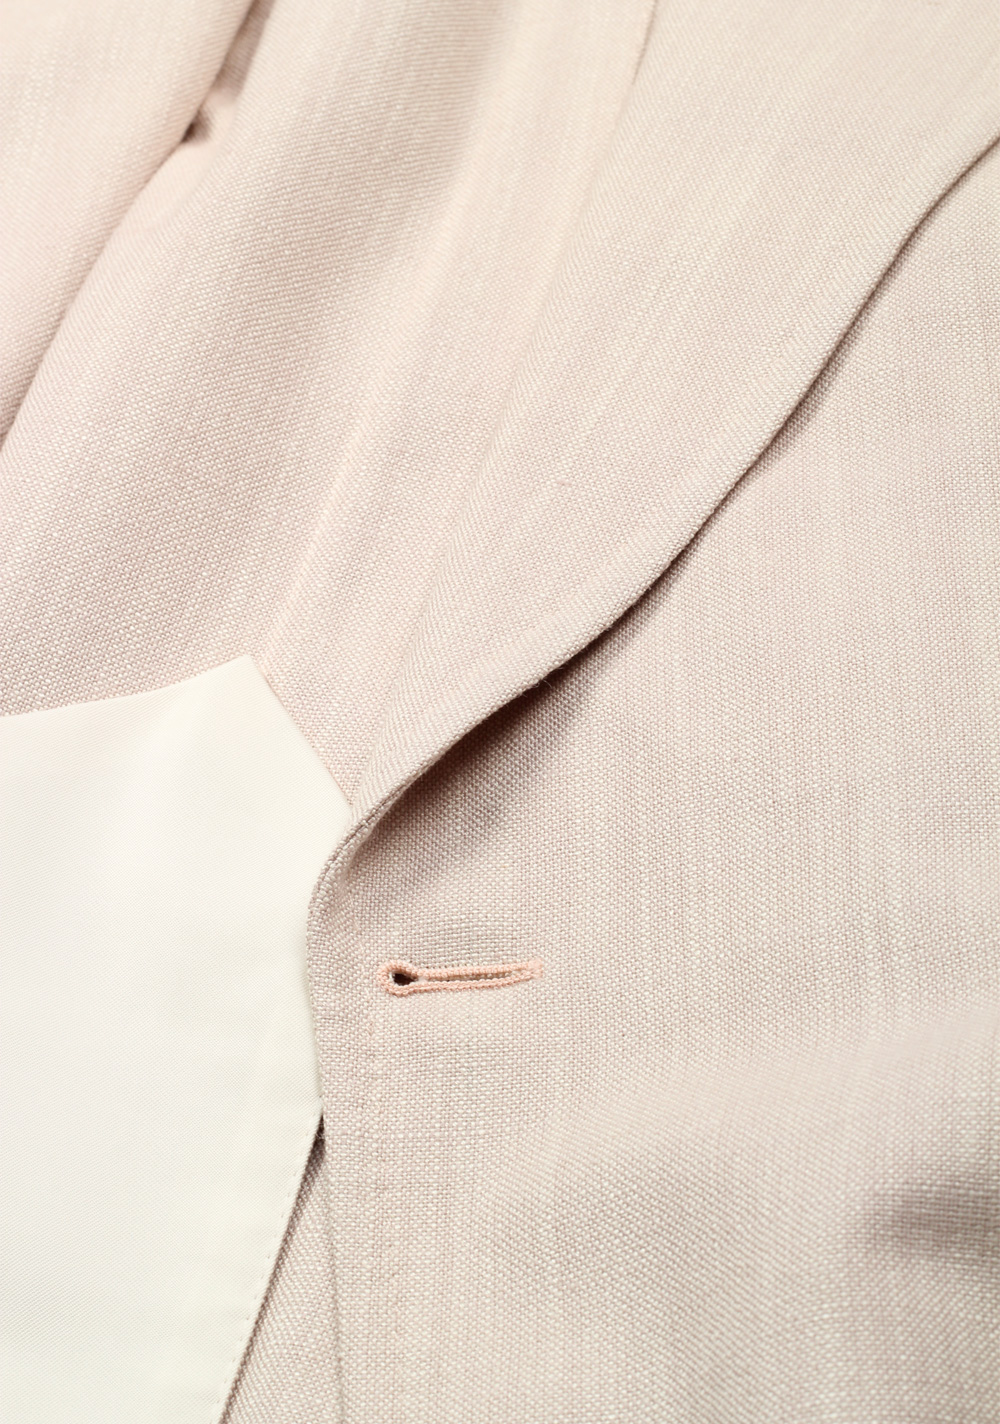 TOM FORD Shelton Beige Suit Size 48 / 38R U.S. In Silk | Costume Limité